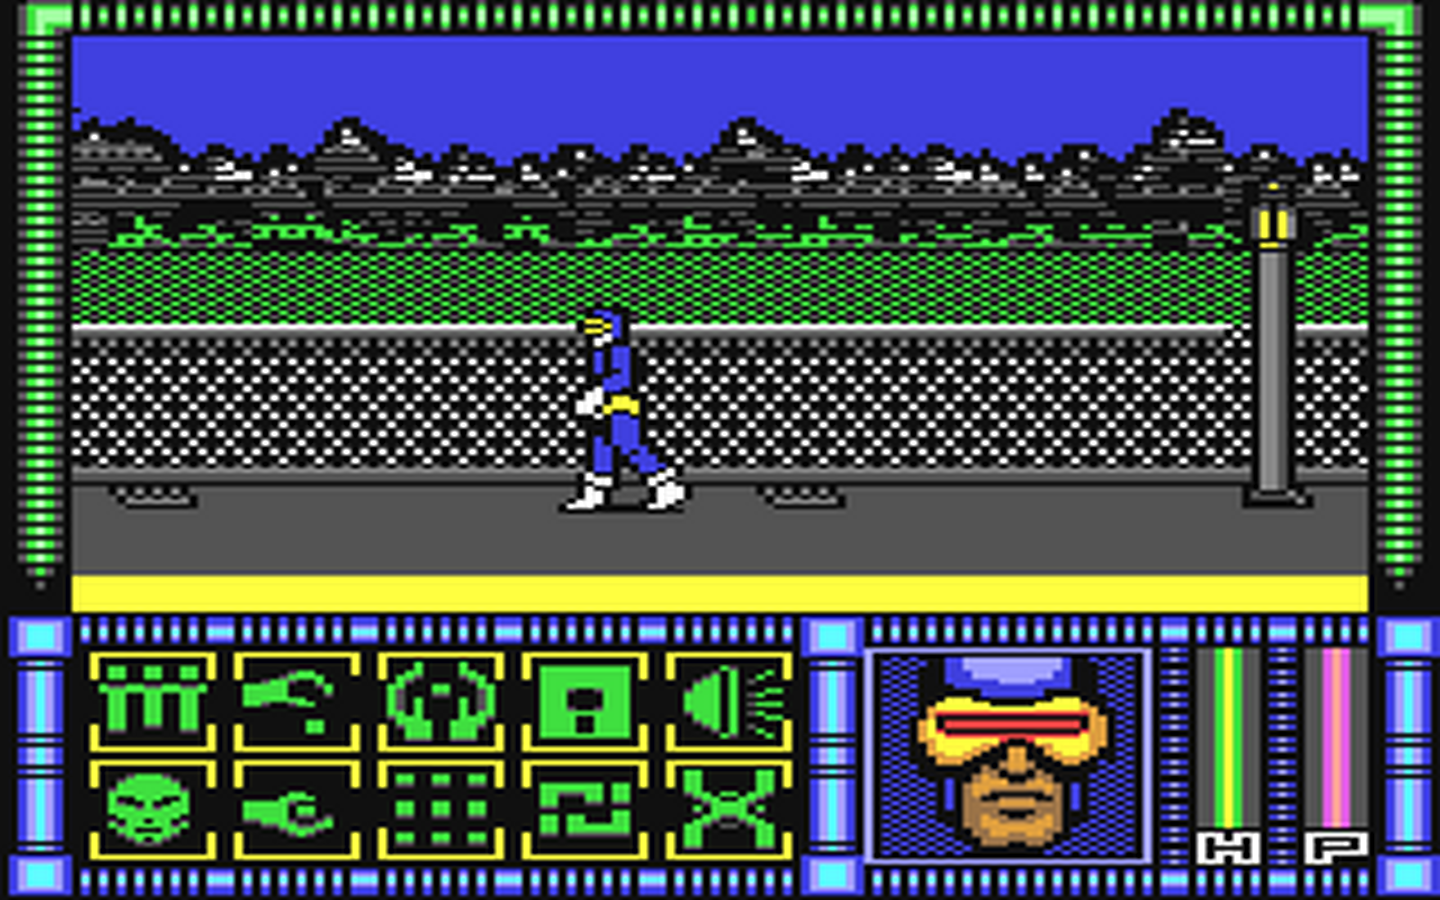 C64 GameBase X-Men_-_Madness_in_Murderworld Paragon_Software 1989